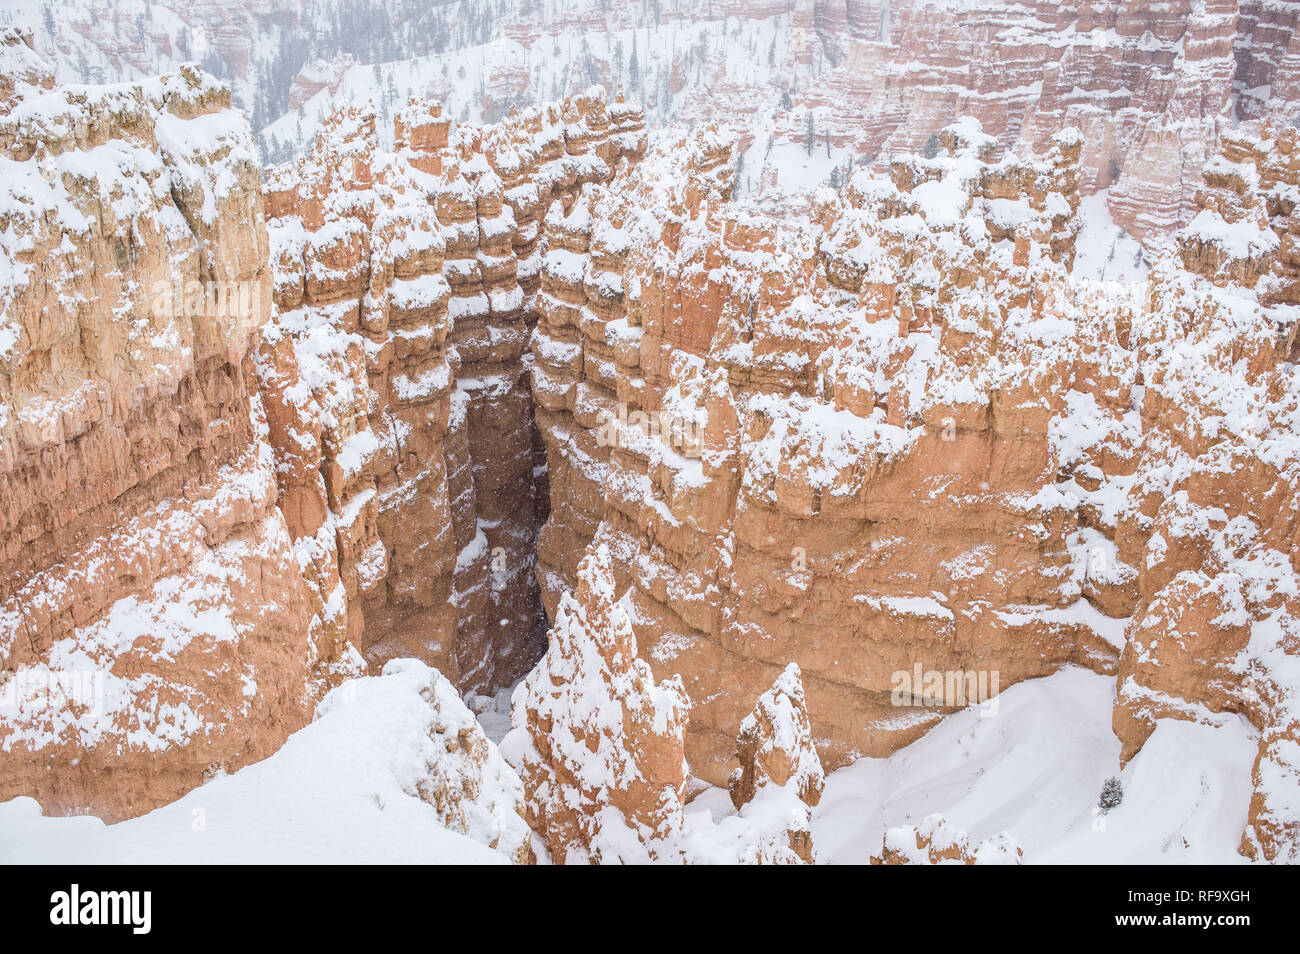 Höhe Bryce Canyon National Park, Paunsaugunt Plateau, Utah, Schnee im Winter, die Gegensatz zum berühmten roten Rock im Park Hoodoos Stockfoto